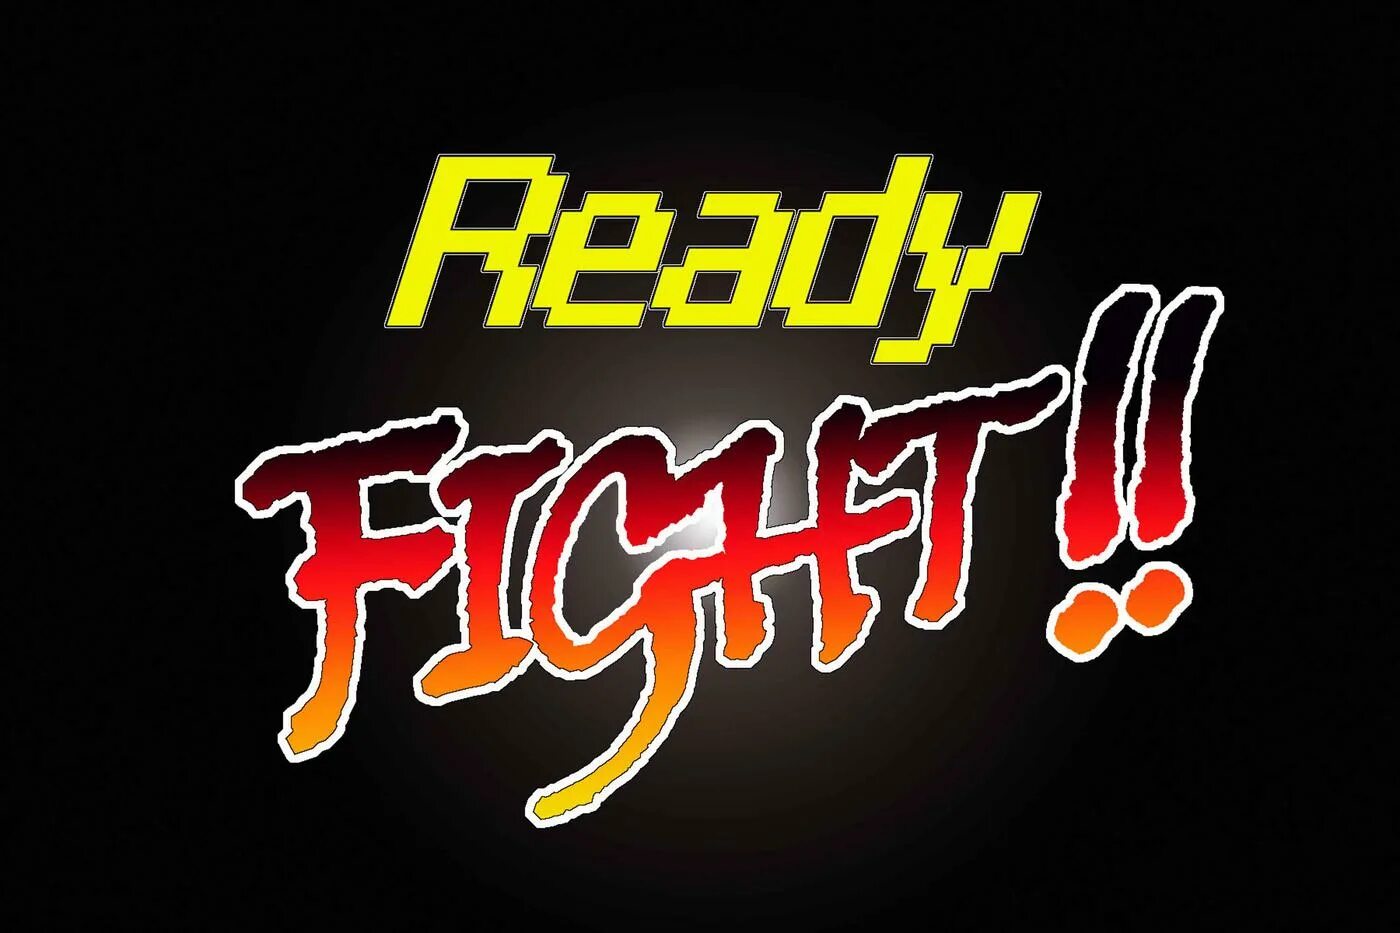 Ready Fight. Great Fight логотип. Раунд 2 файт. Ready to Fight логотипа.